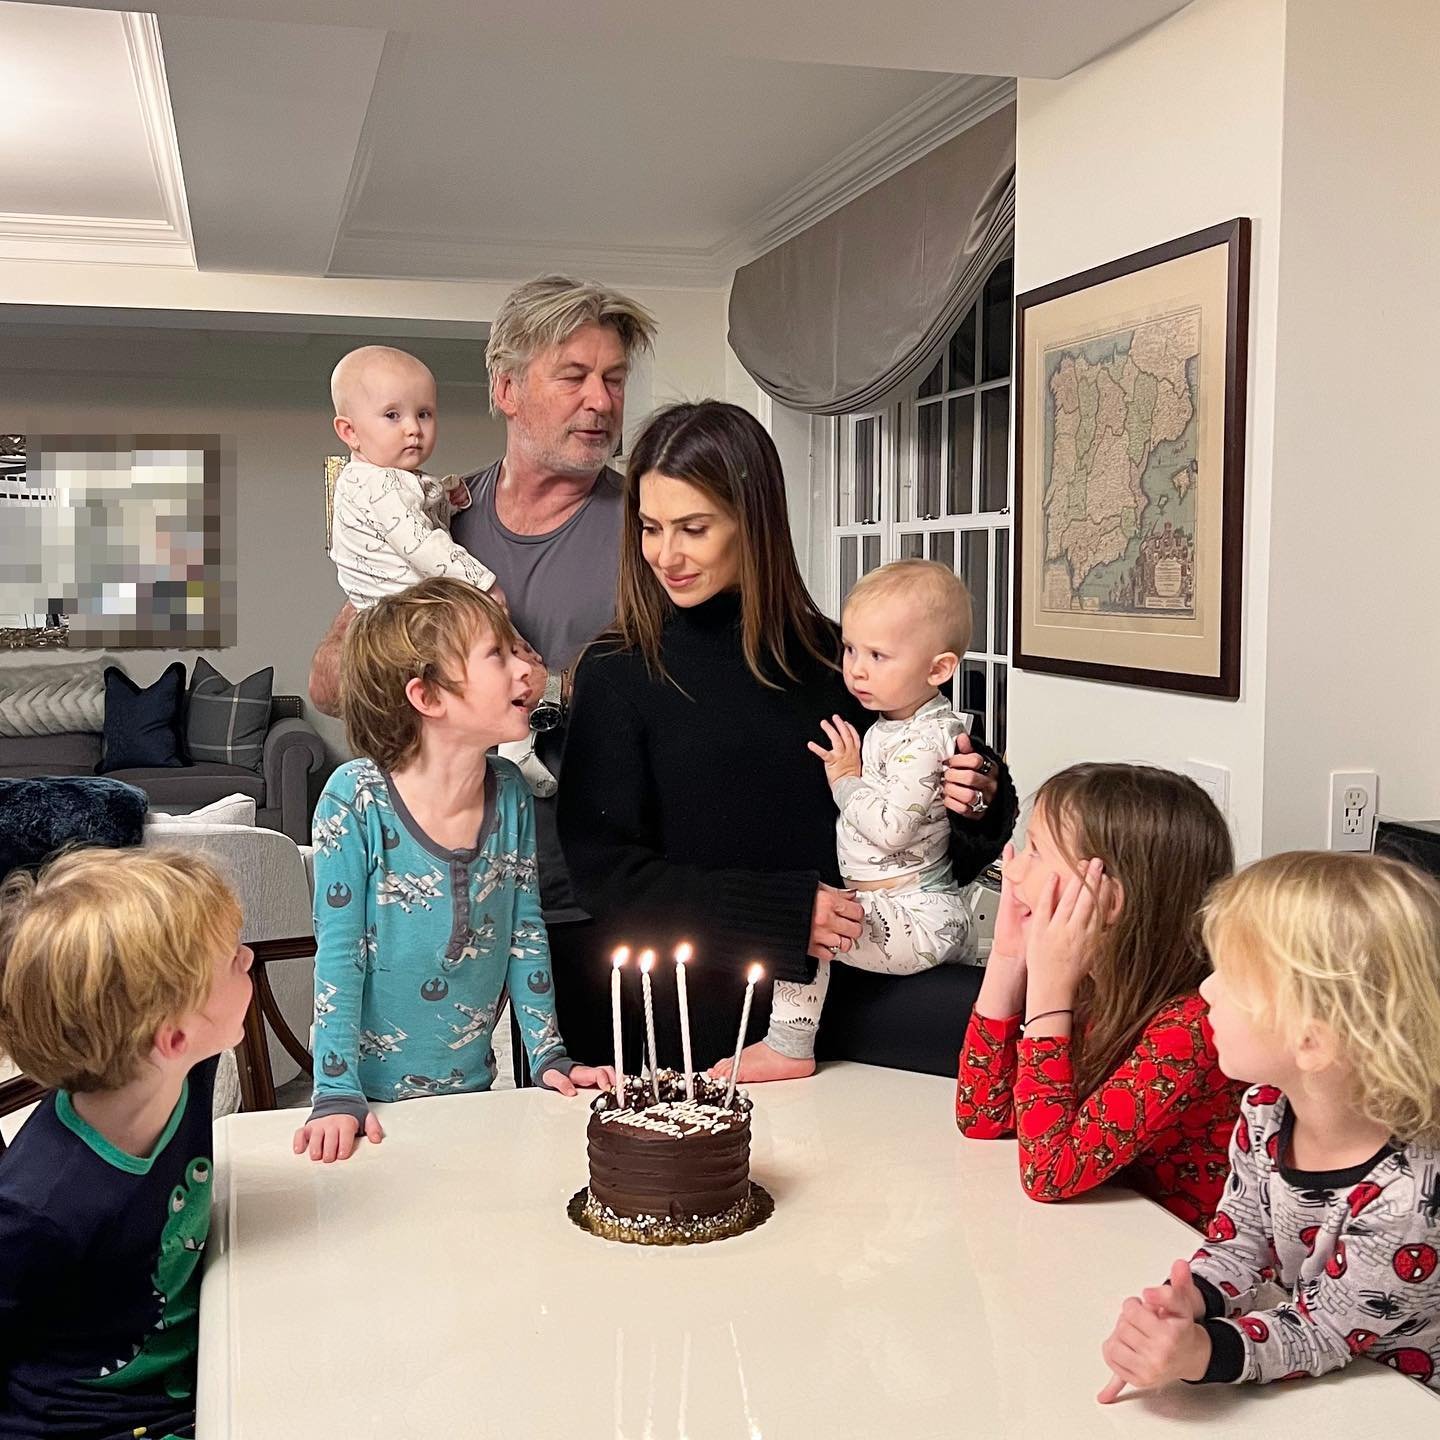 alec and hilaria baldwin with their kids gathered around a birthday cake